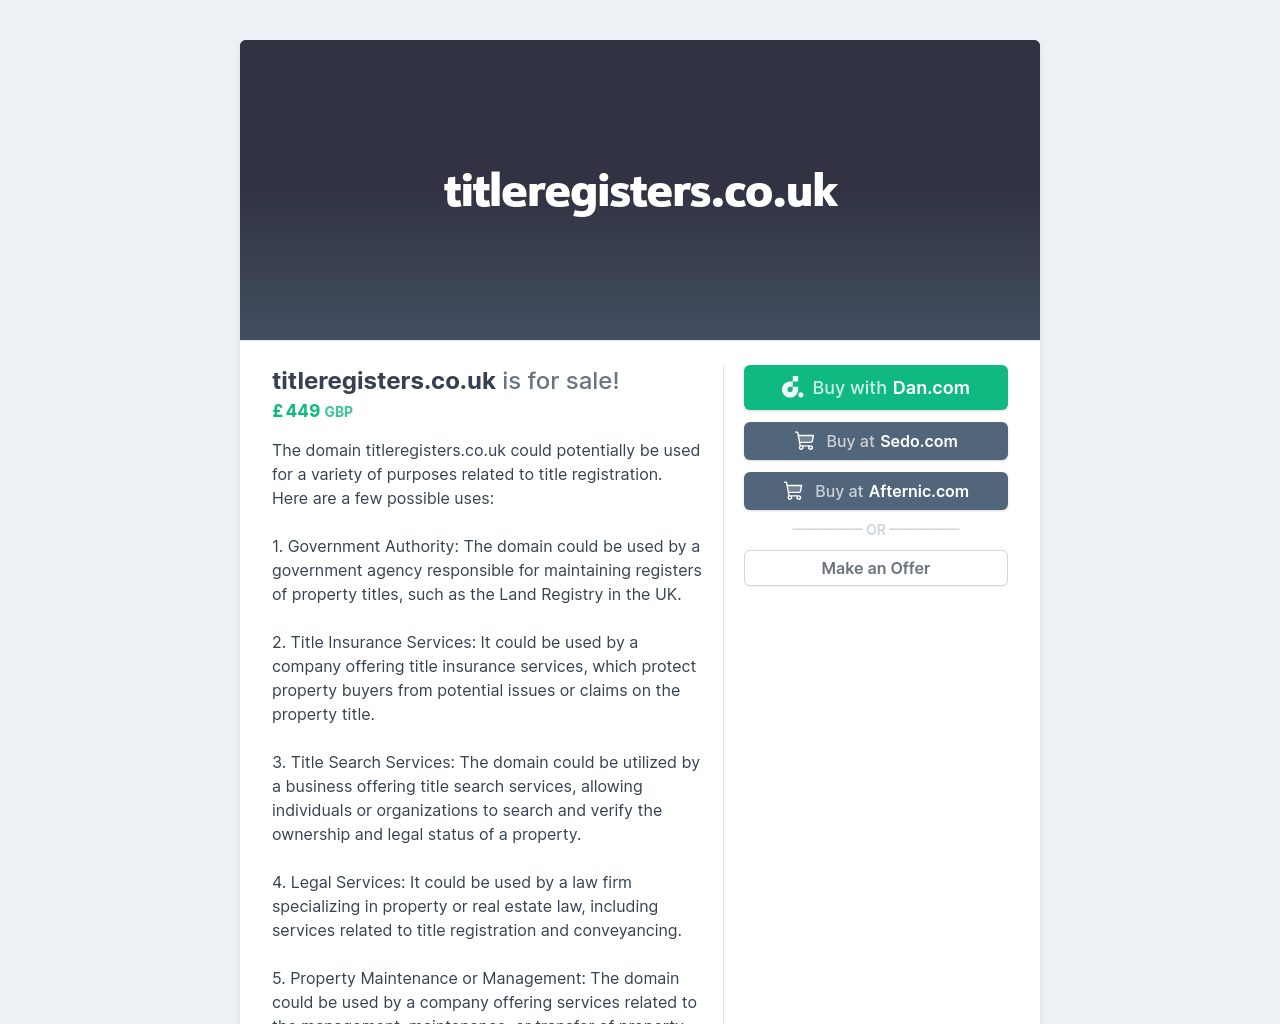 titleregisters.co.uk